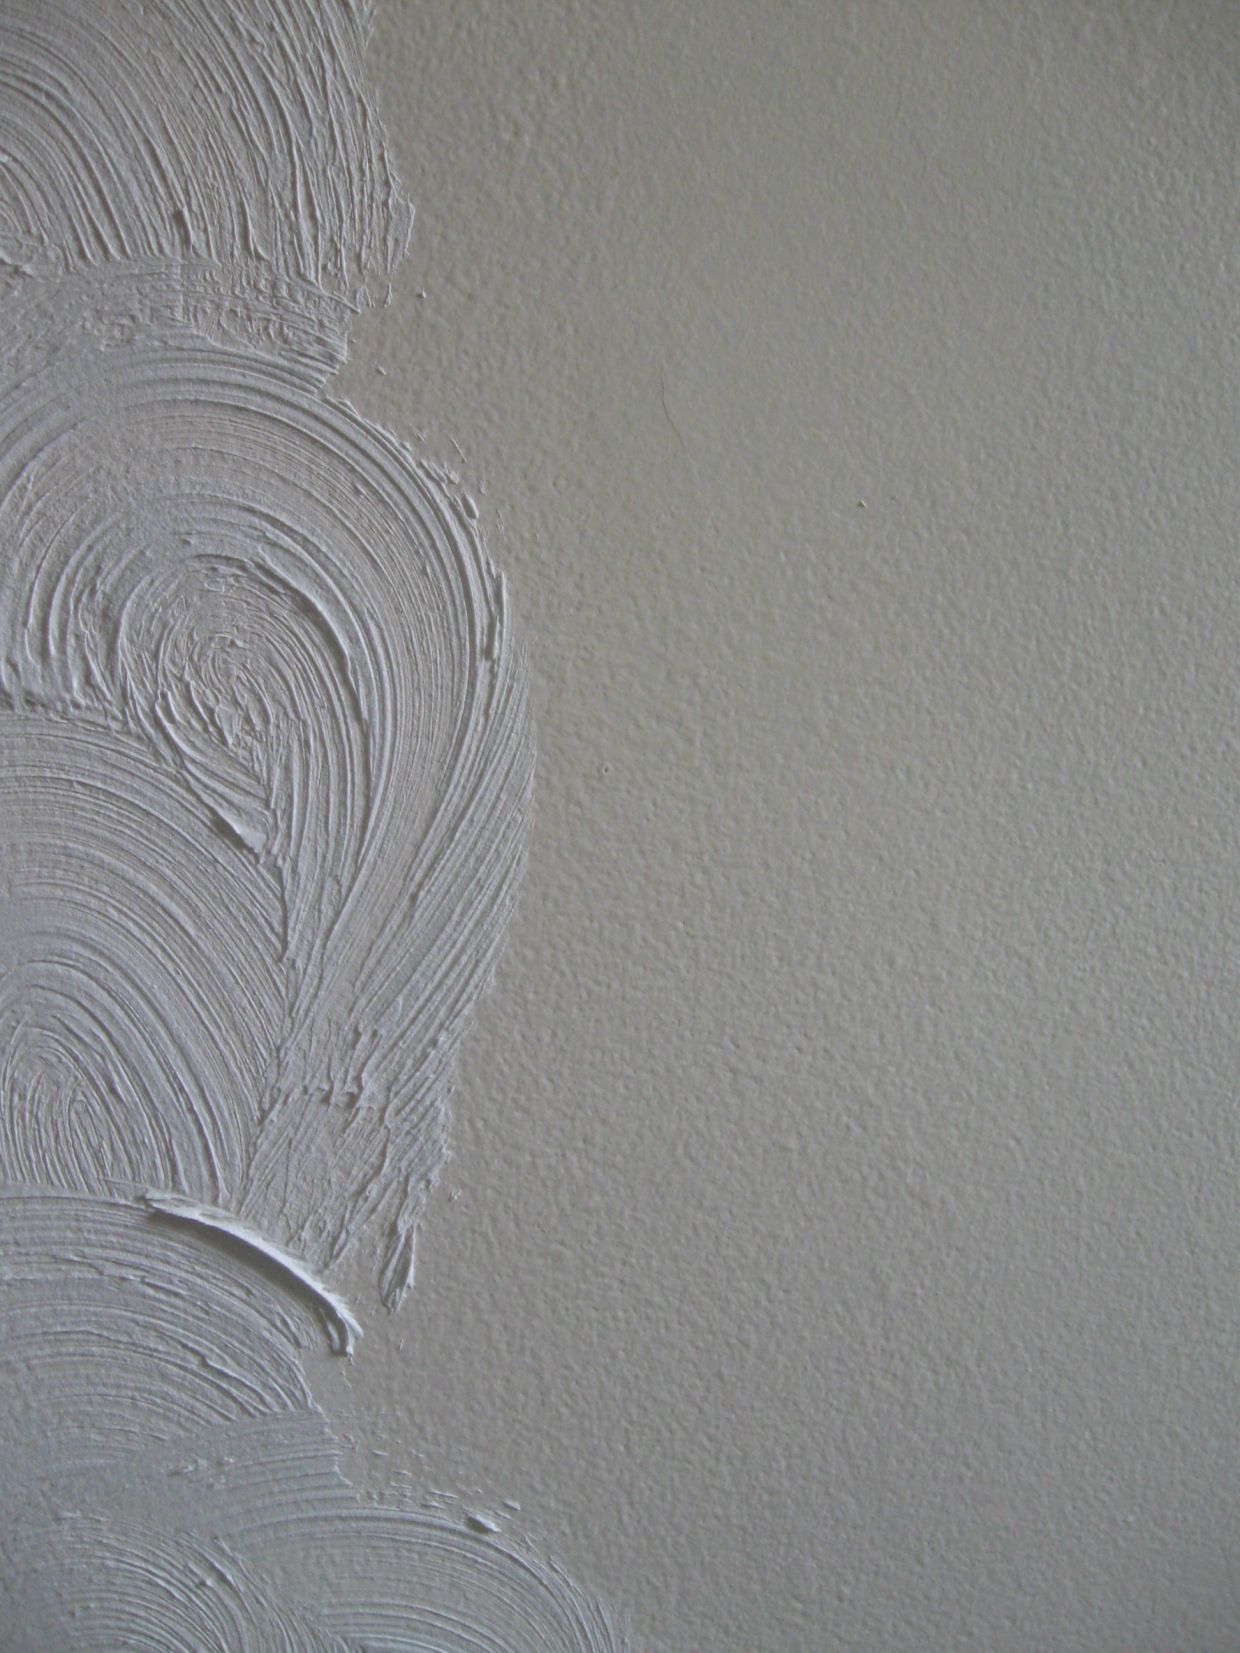 Sand Swirl Wall Texture Types